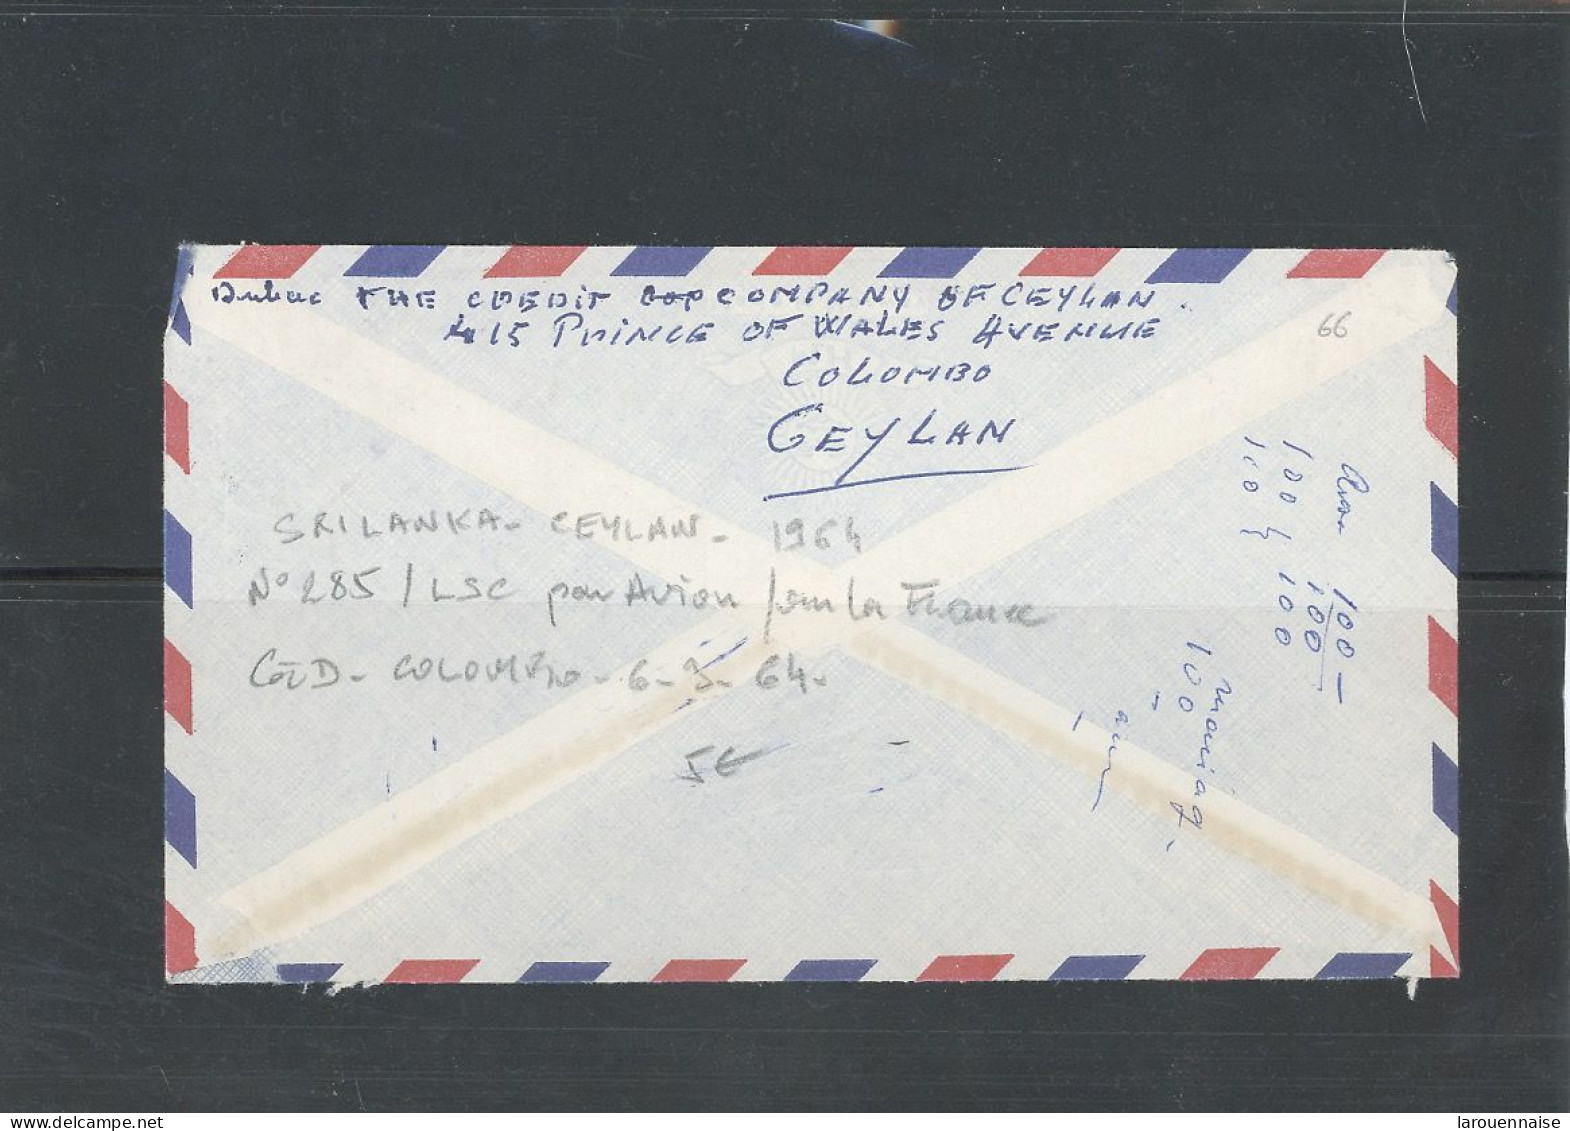 SRI LANKA -CEYLAN -N°285 /LSC PAR AVION POUR LA FRANCE -CàD COLOMBO -6-5-64 - Sri Lanka (Ceylan) (1948-...)